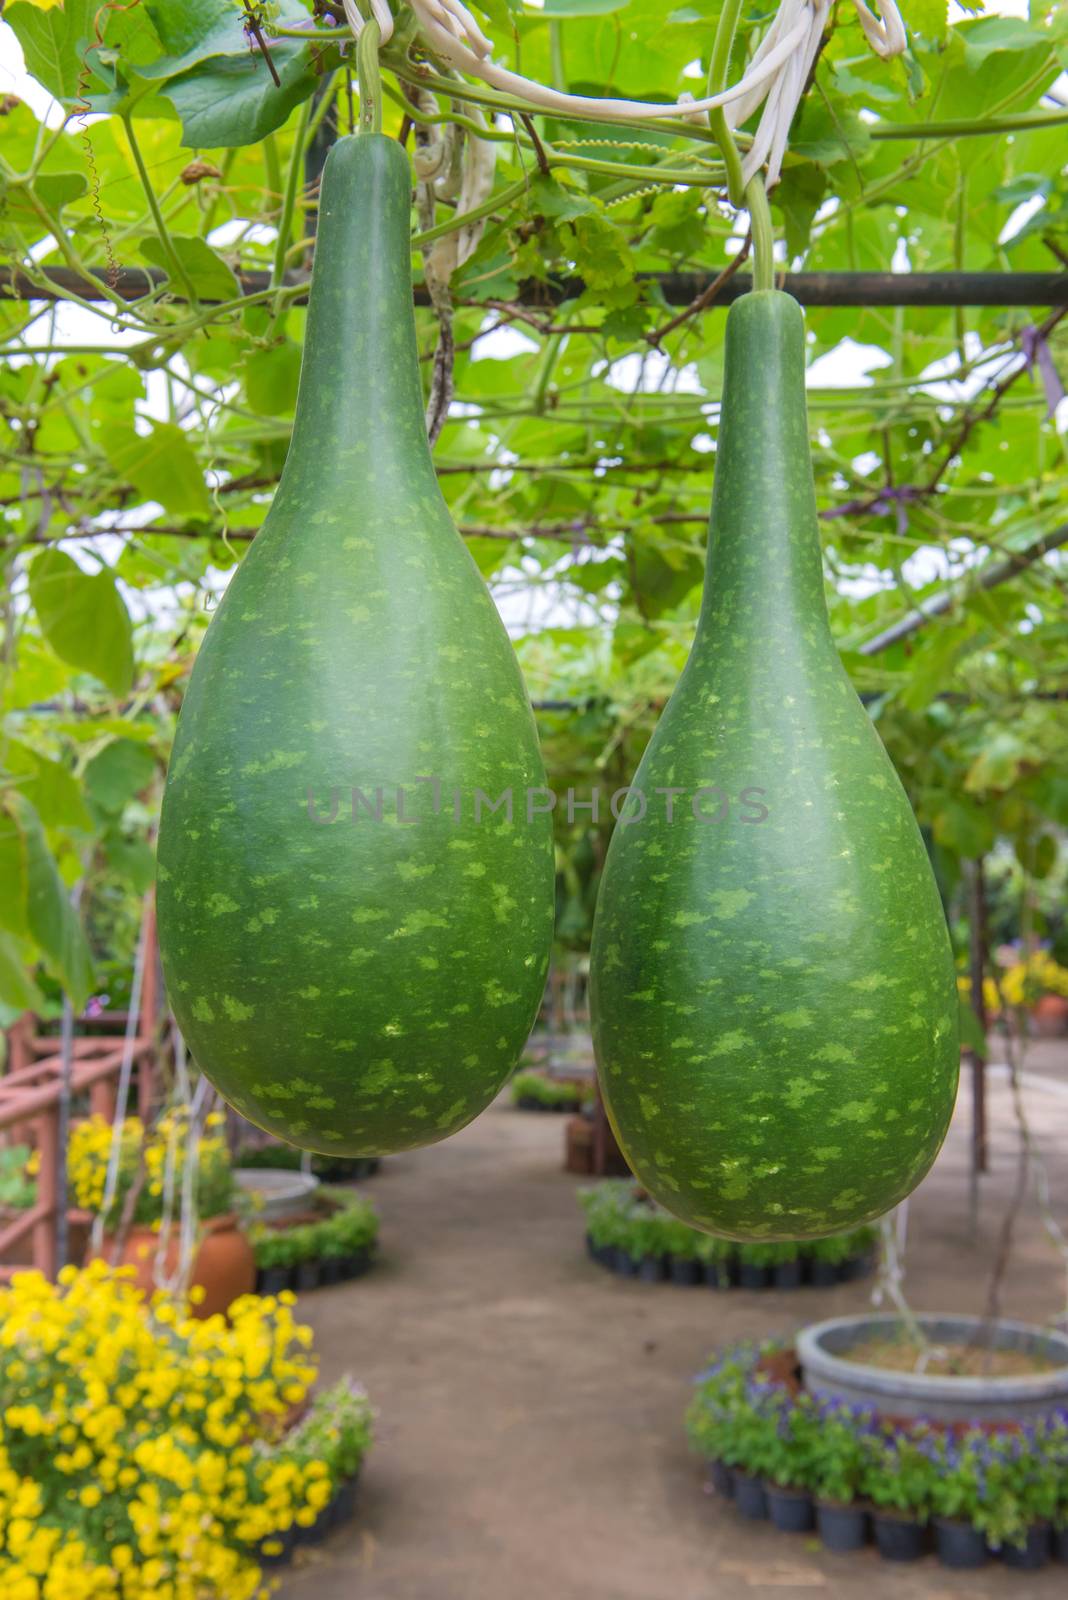 Hanging winter melon in the garden or Wax gourd, Chalkumra in fa by casanowe